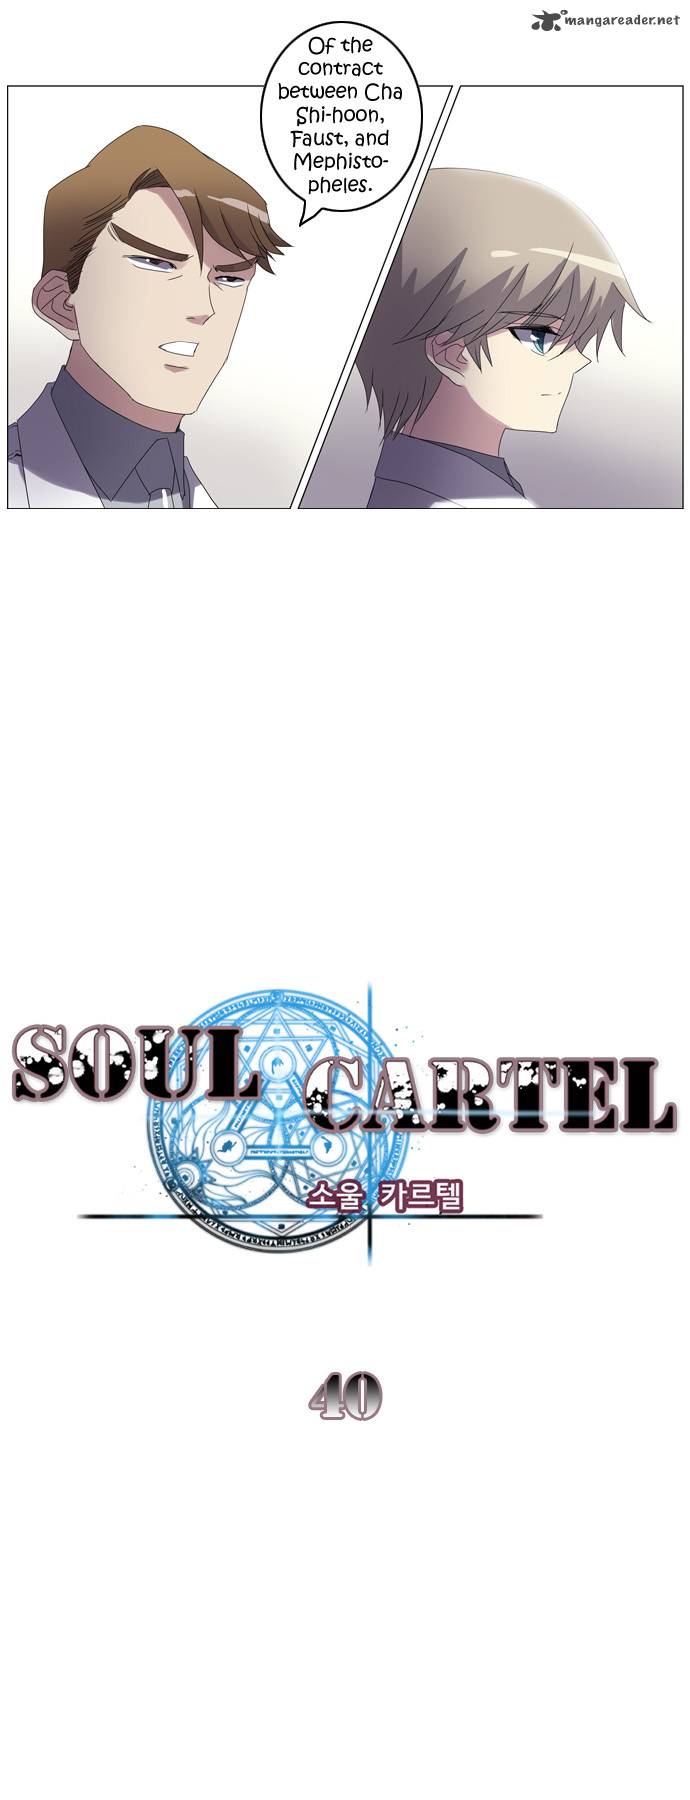 soul_cartel_40_3